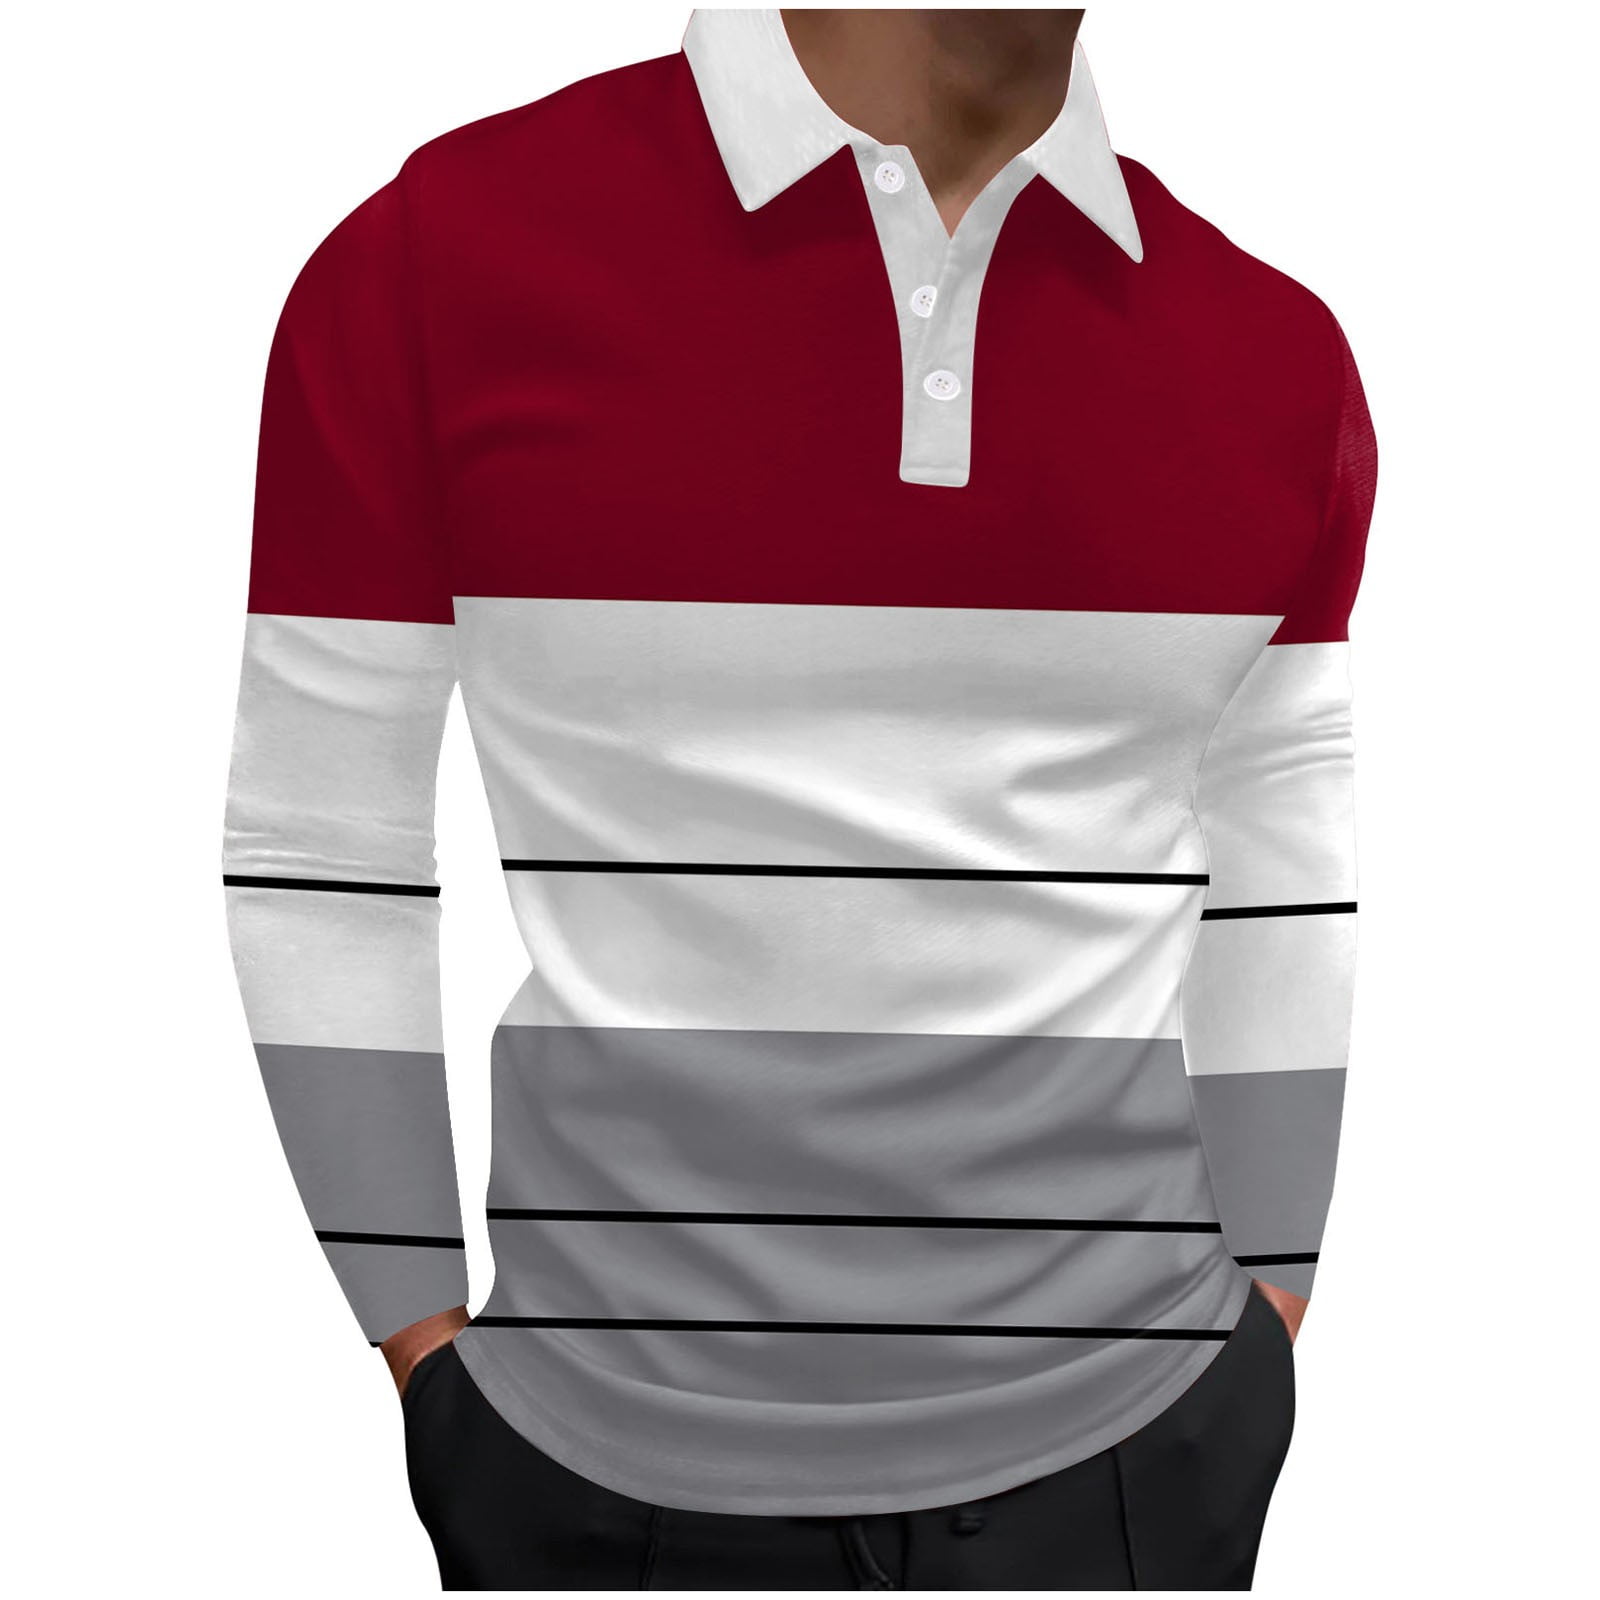 Entyinea Golf Shirts for Men Long Sleeve Sports Golf Tennis T-Shirt S ...